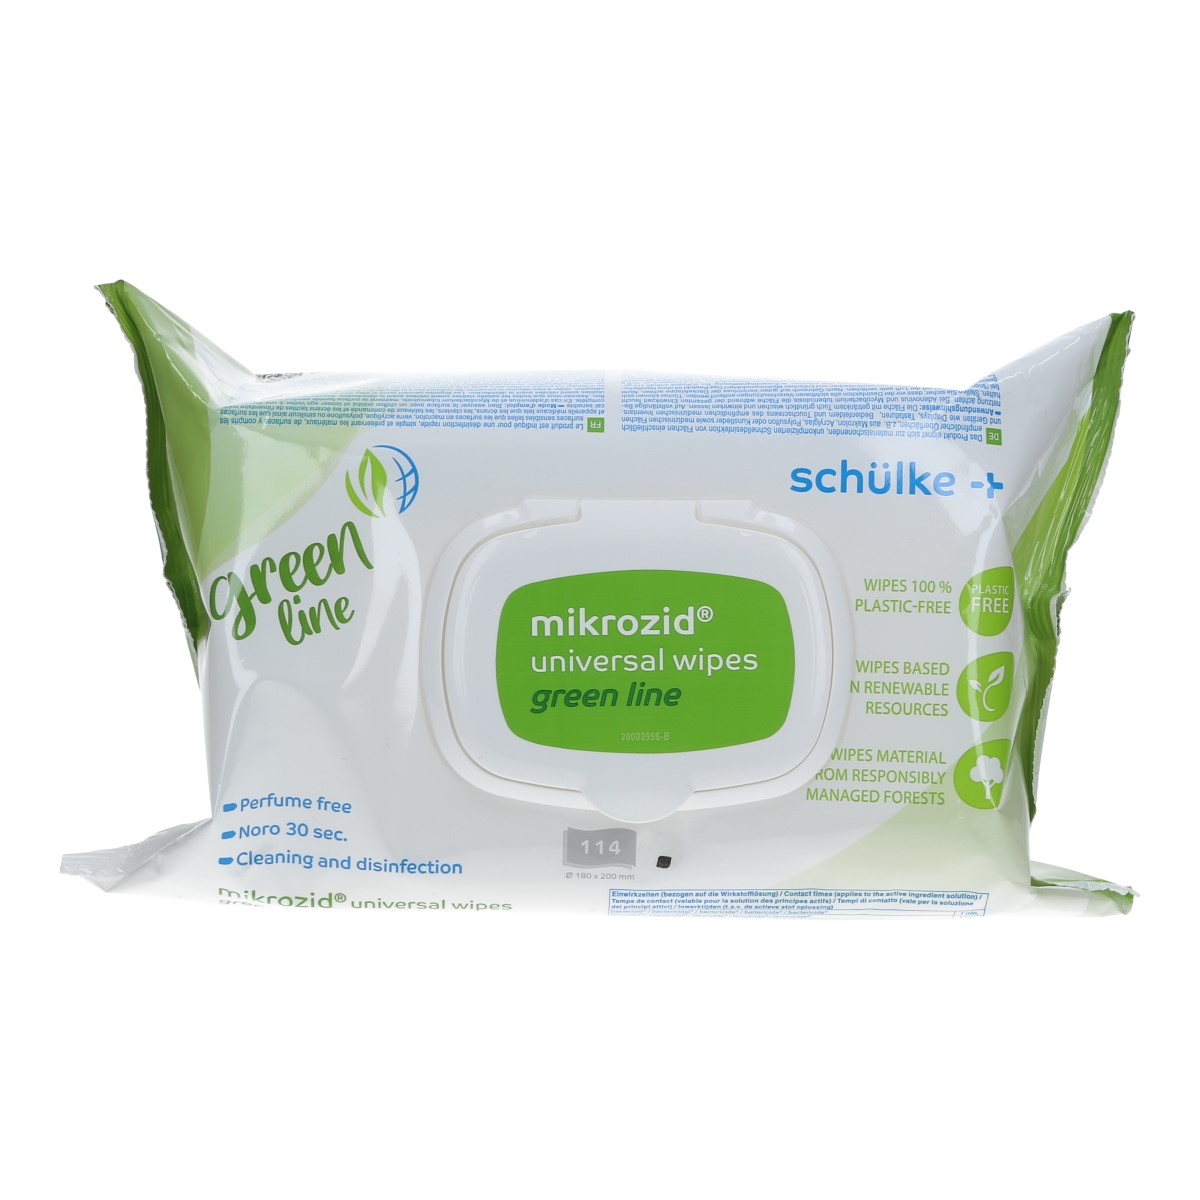 schülke mikrozid universal wipes green line premium Desinfektionstücher